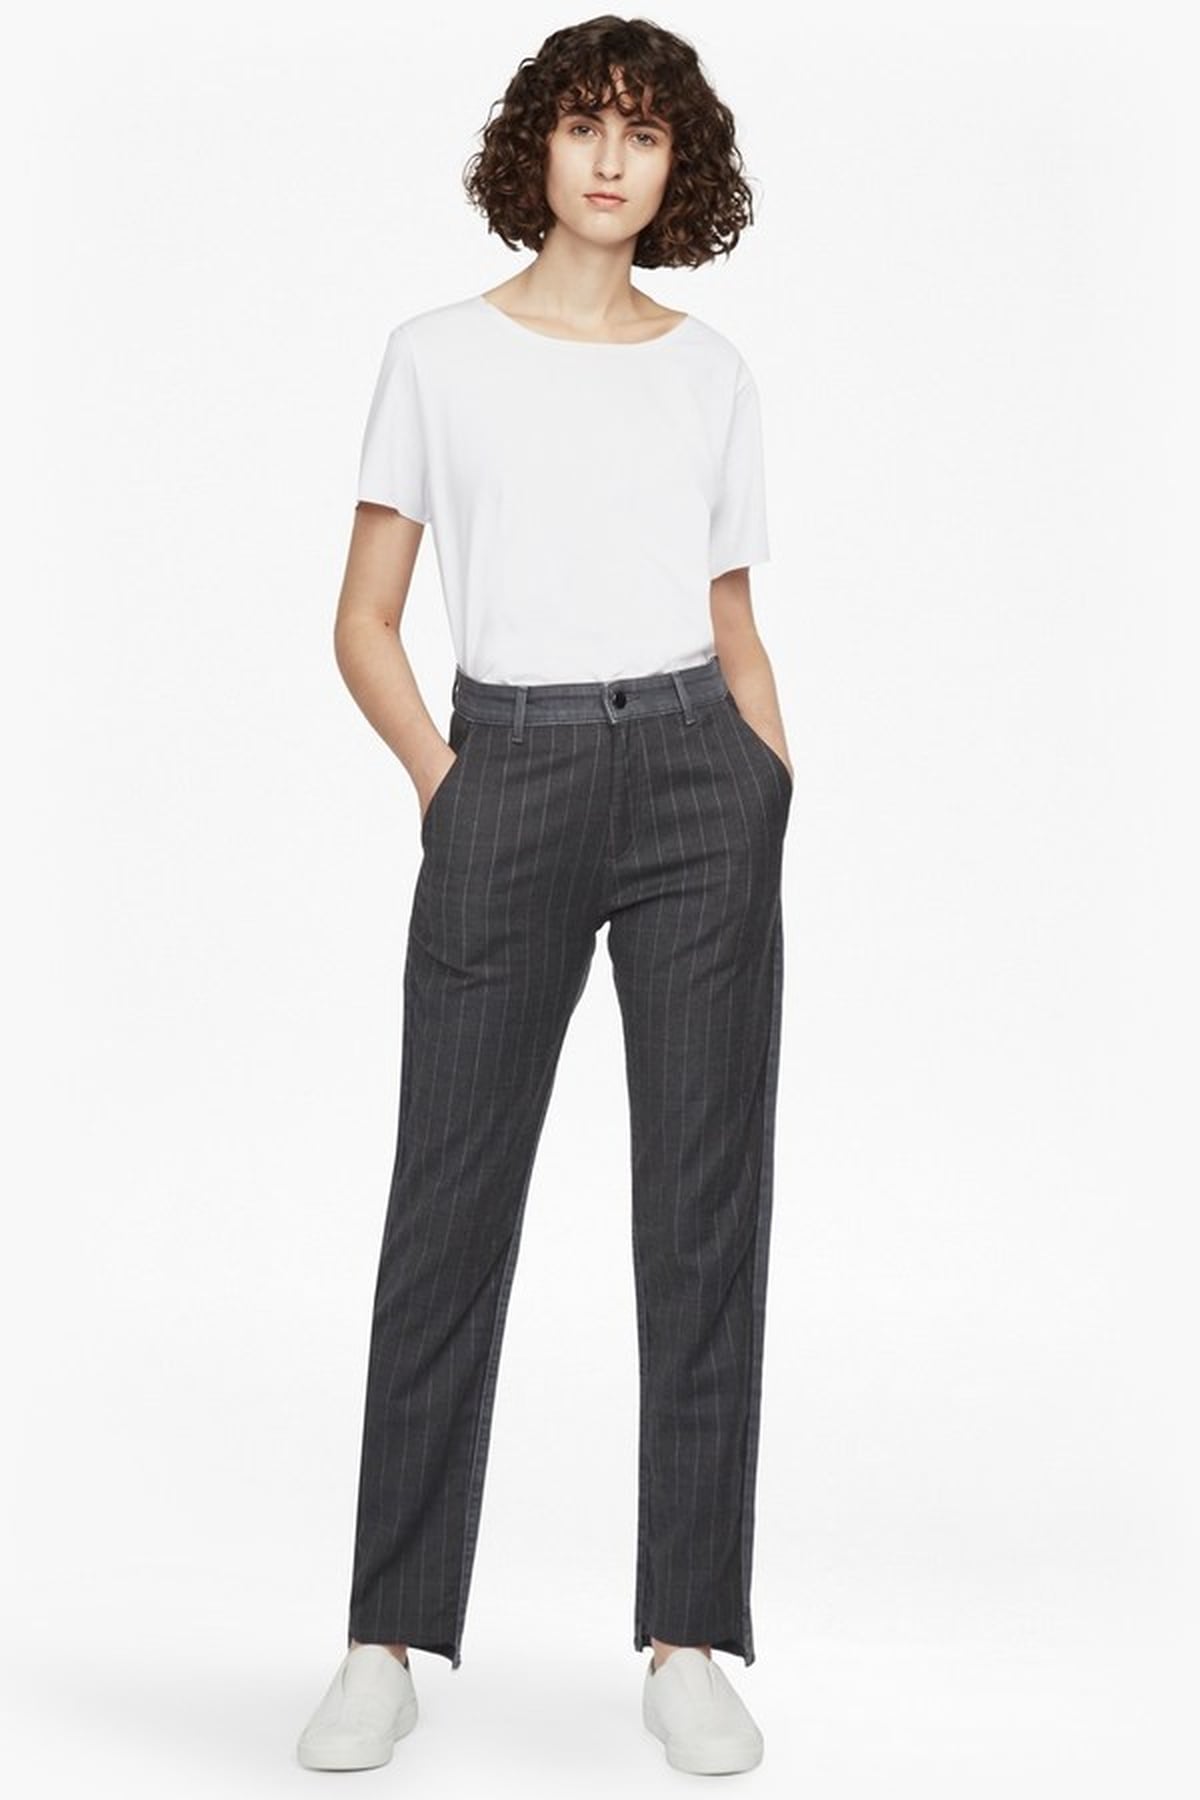 Emily Ratajkowski Striped Reformation Jeans | POPSUGAR Fashion